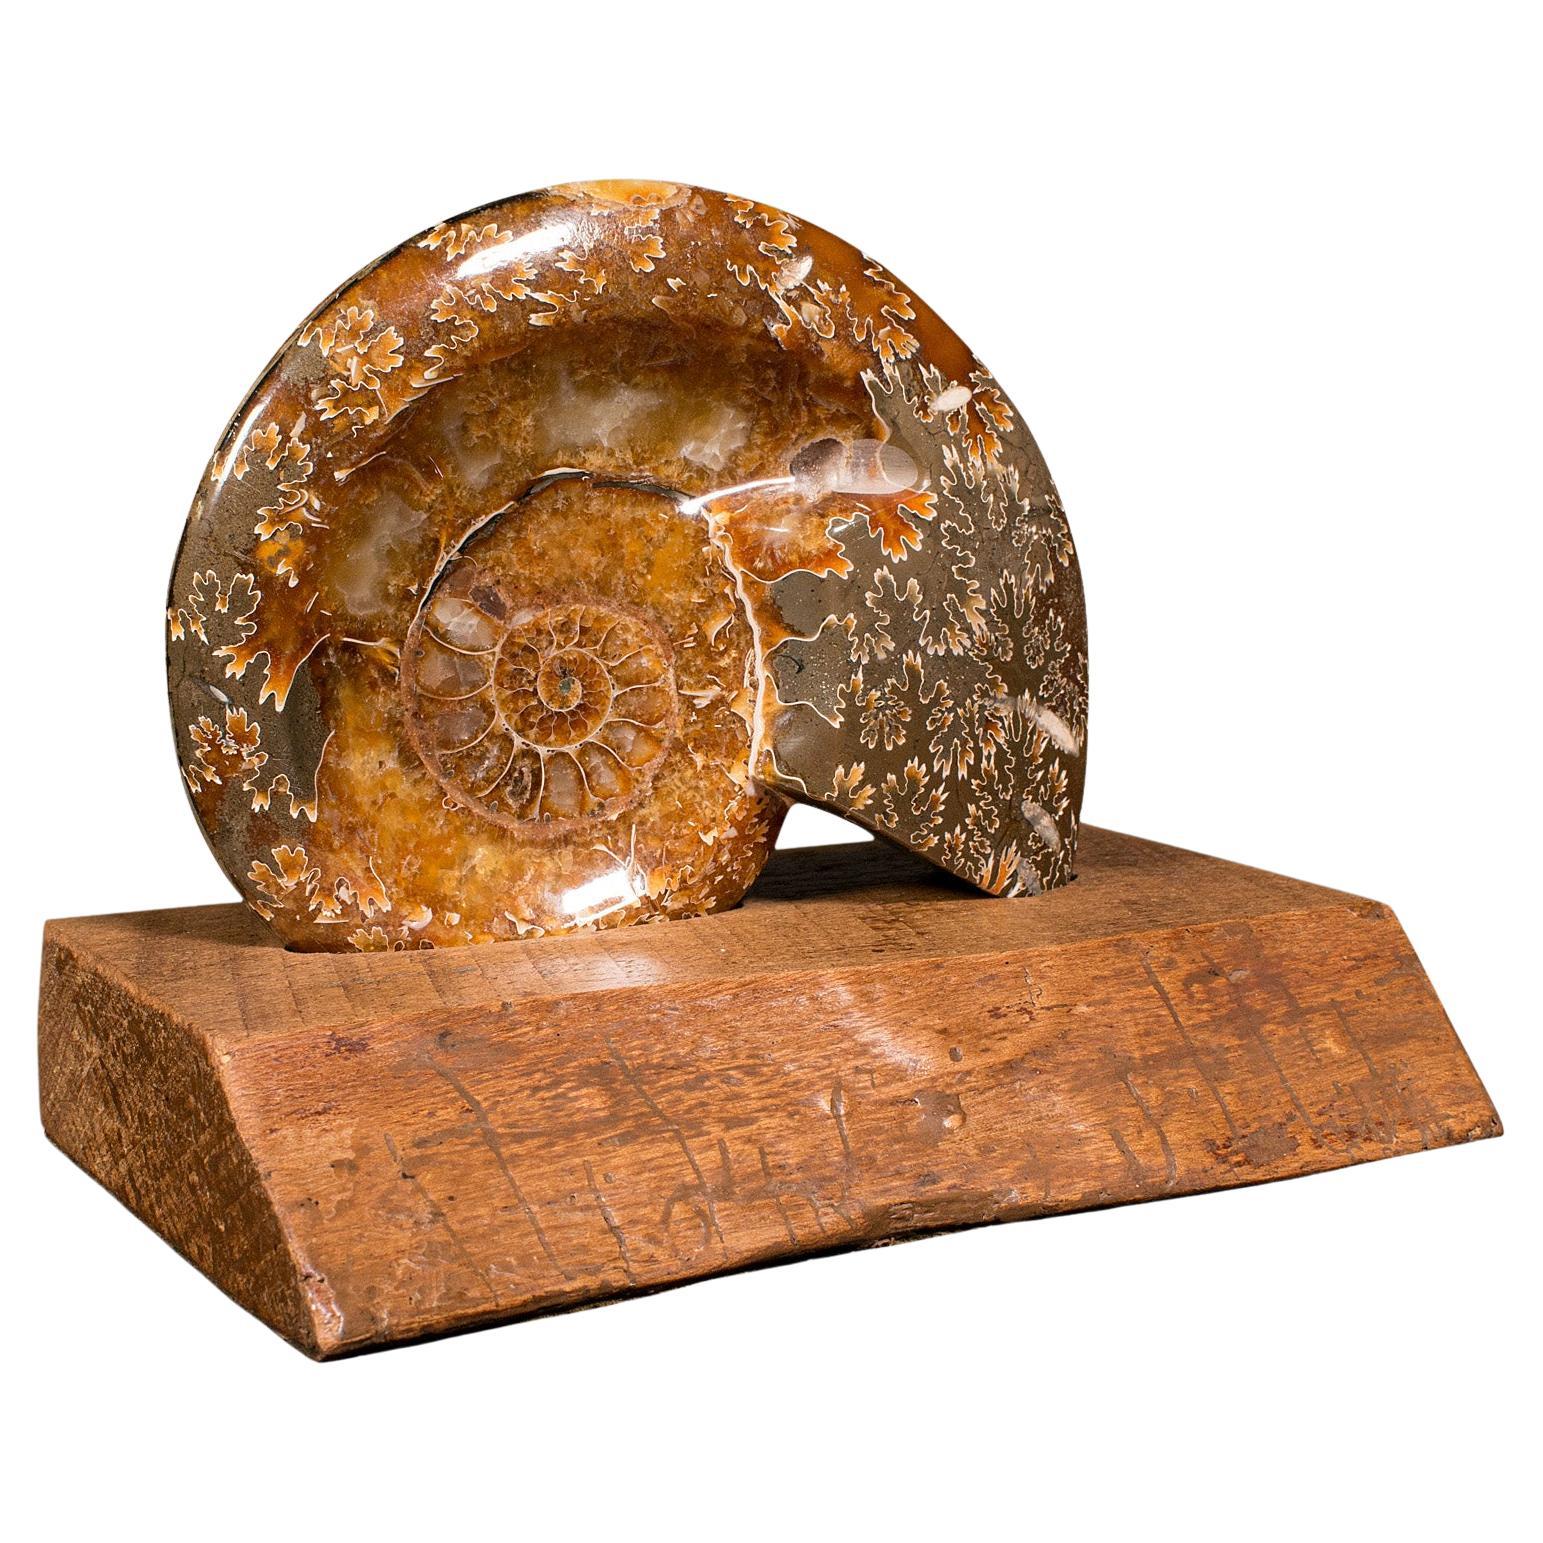 Dekoratives Ammonit, afrikanisch, opalisiertes Fossil, ausgestellt, Exemplar, ca. 1970